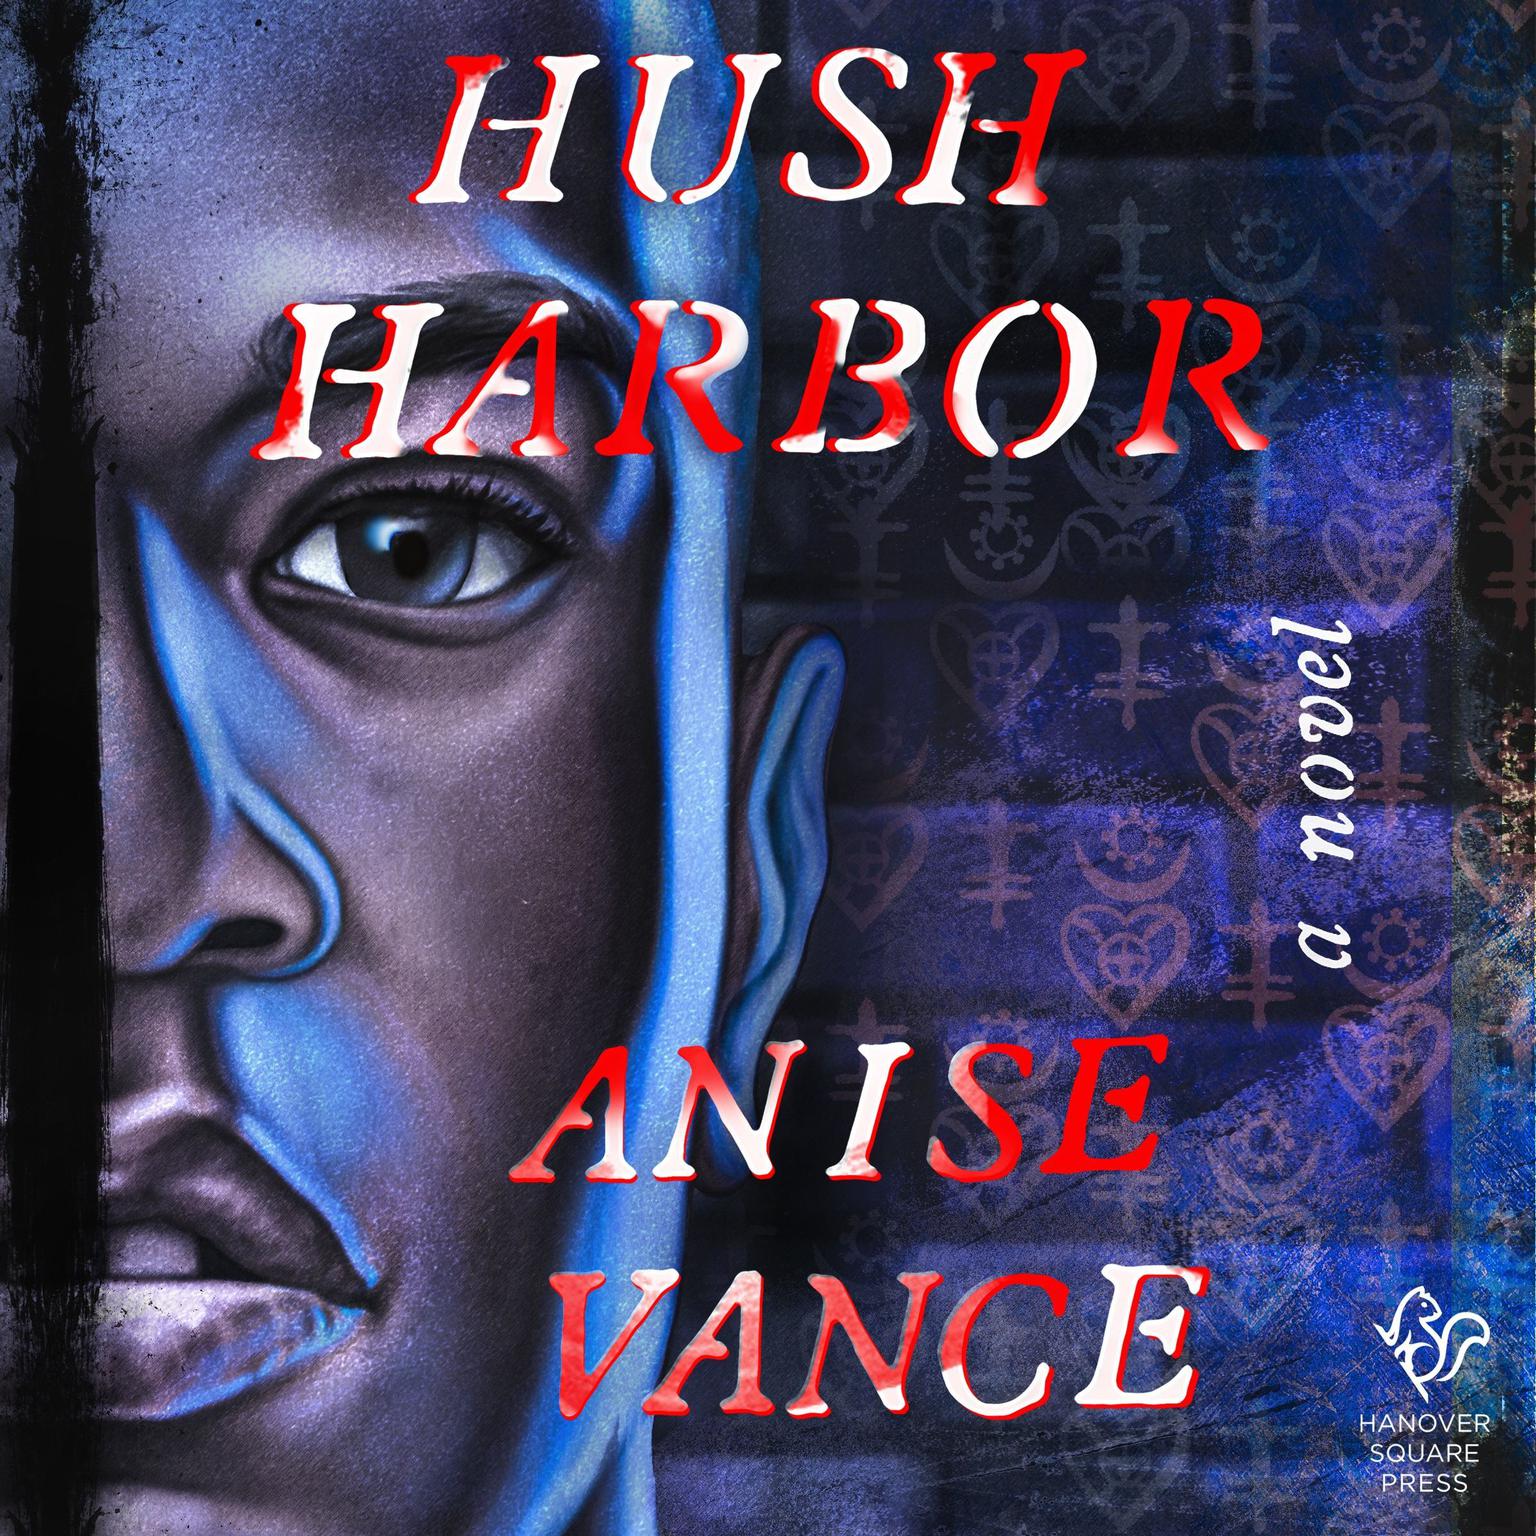 Hush Harbor: A Novel Audiobook, by Anise Vance